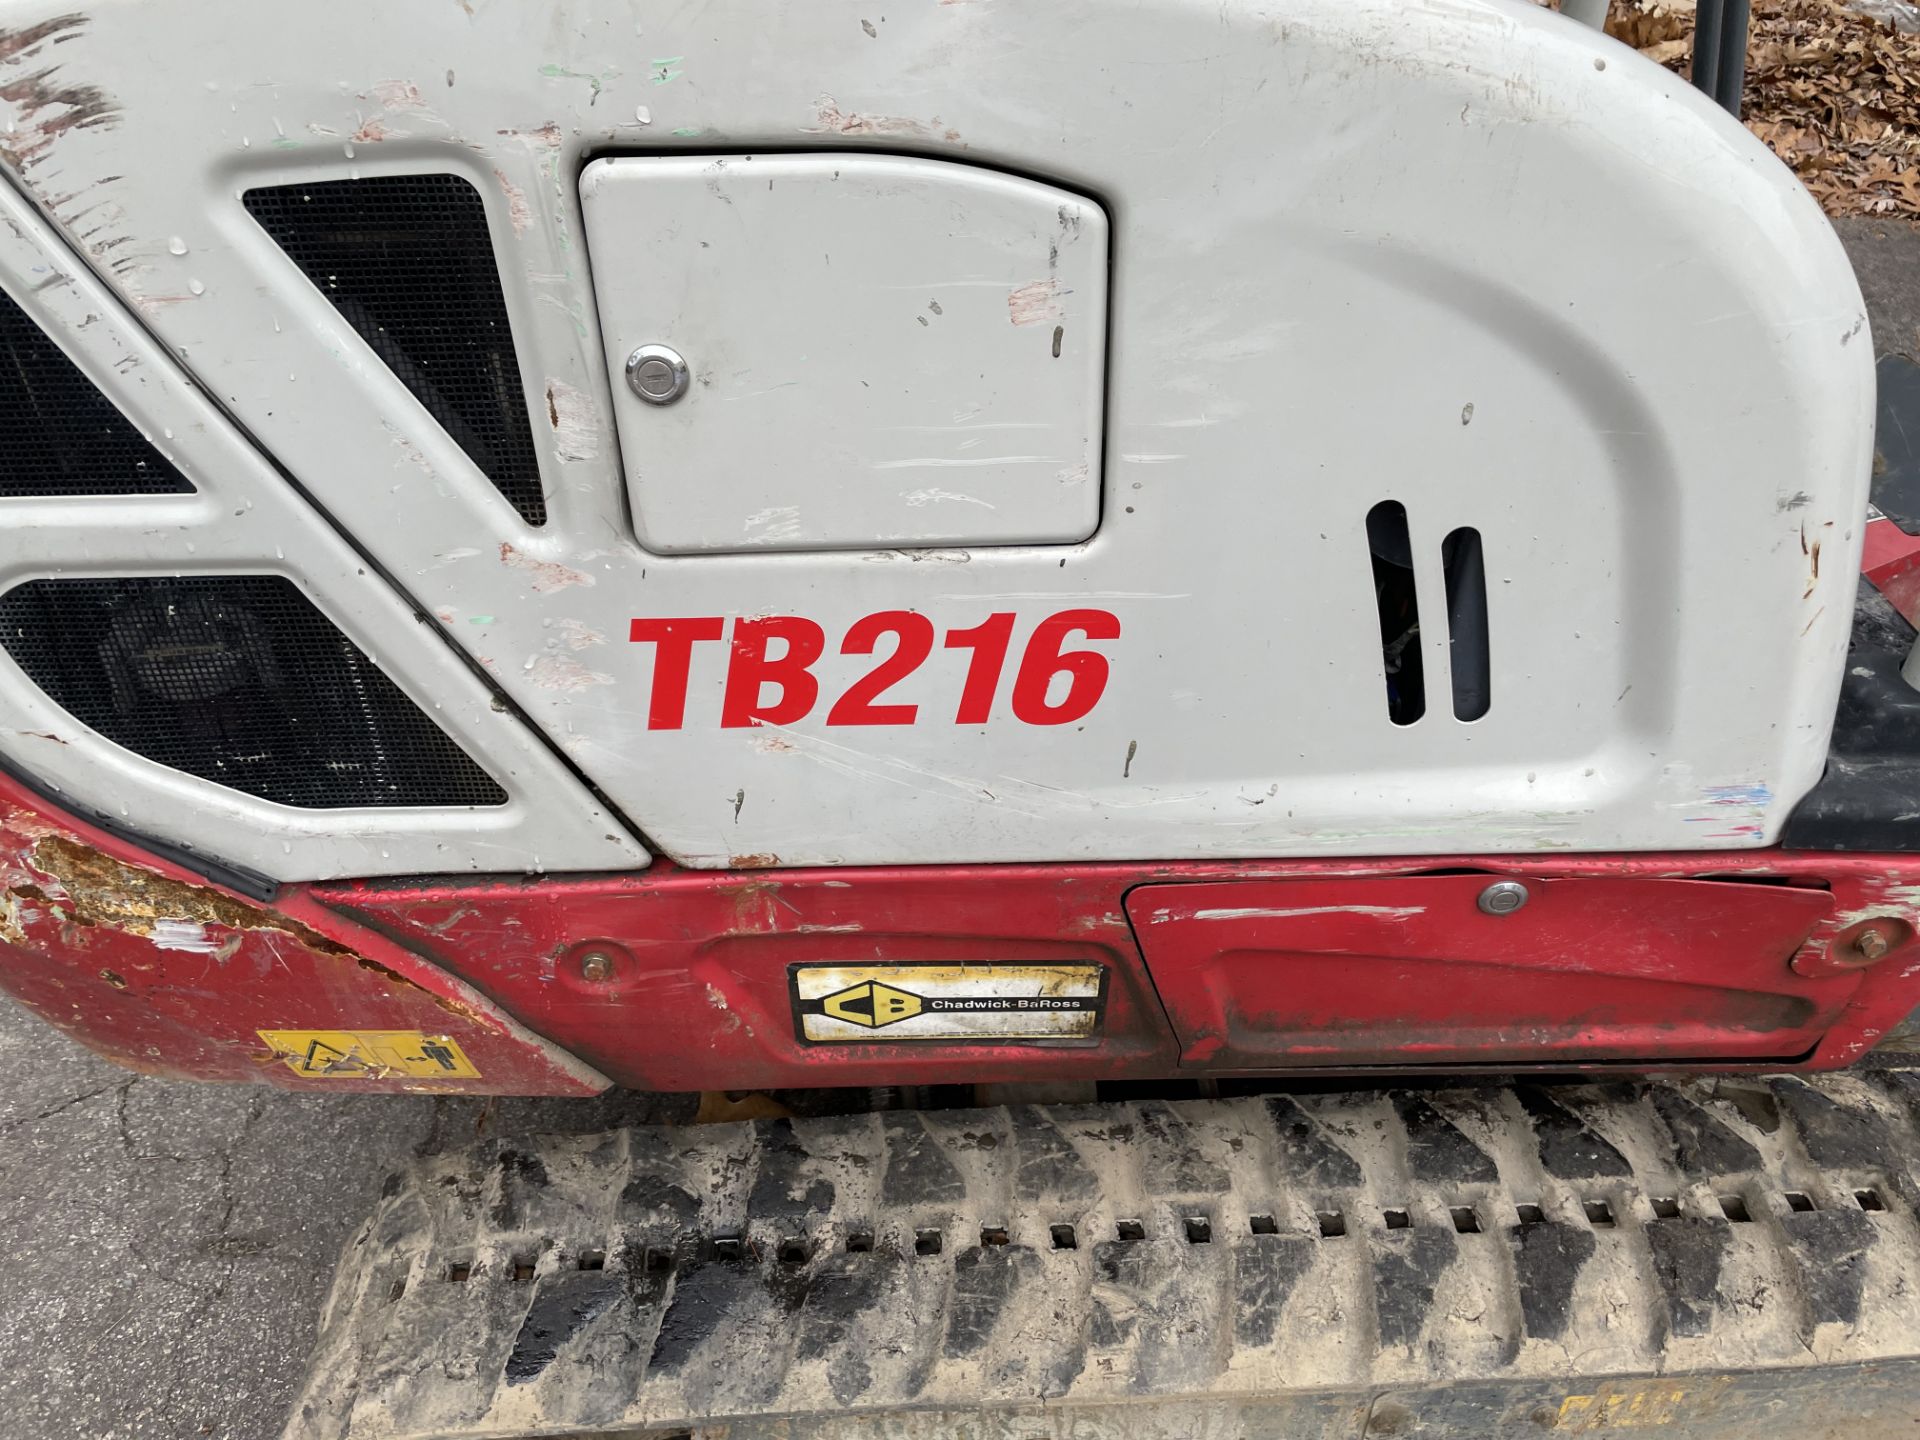 2018 Takeuchi #TB216 Rubber Track Mini Excavator w/36" Scoop Bucket, 38" Pusher Blade & 16" Digging - Image 8 of 9